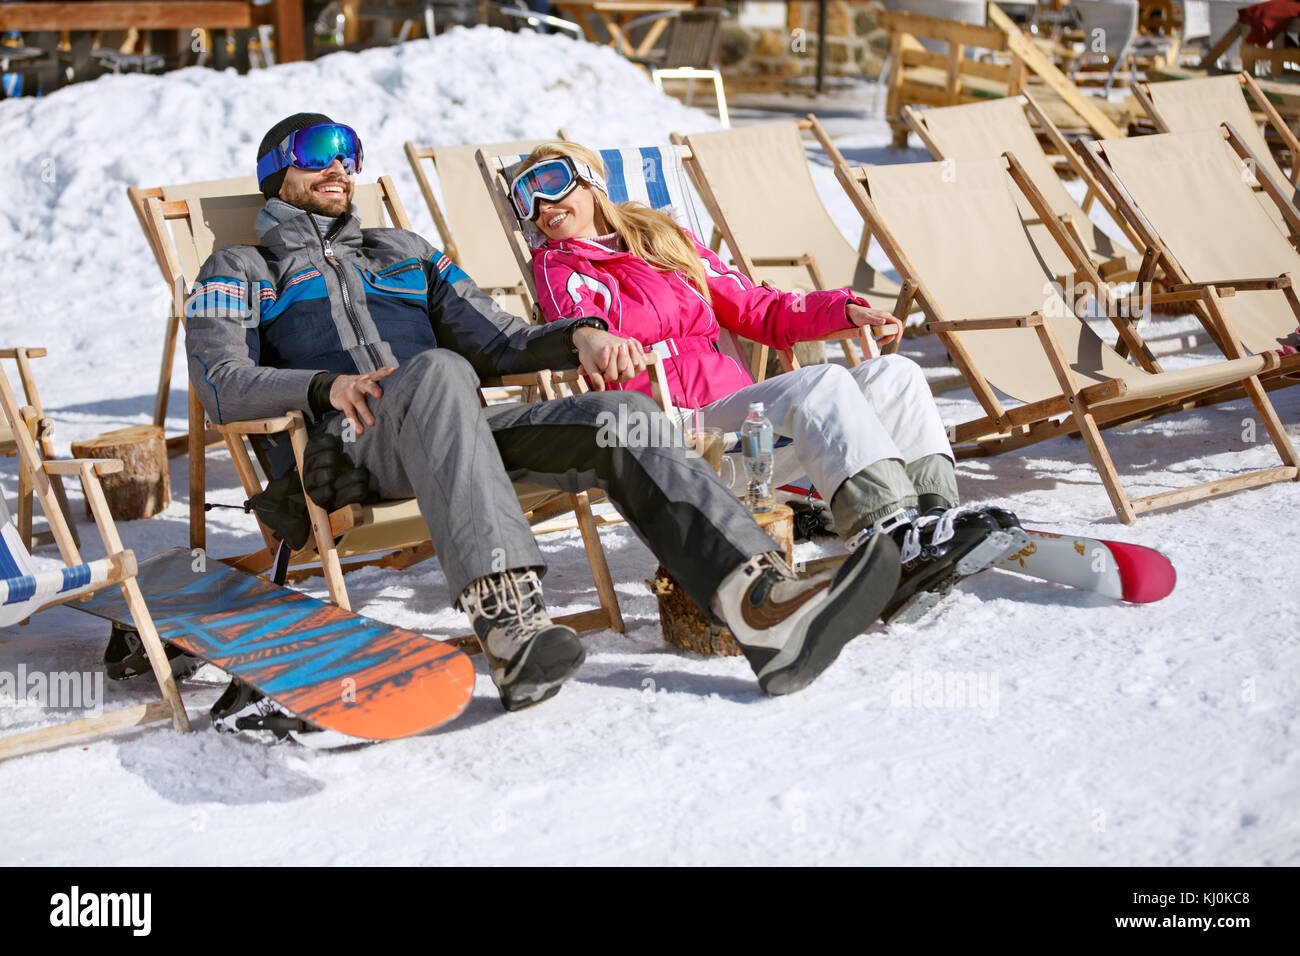 Male and female skiers enjoy in sun loungers on ski terrain Stock Photo